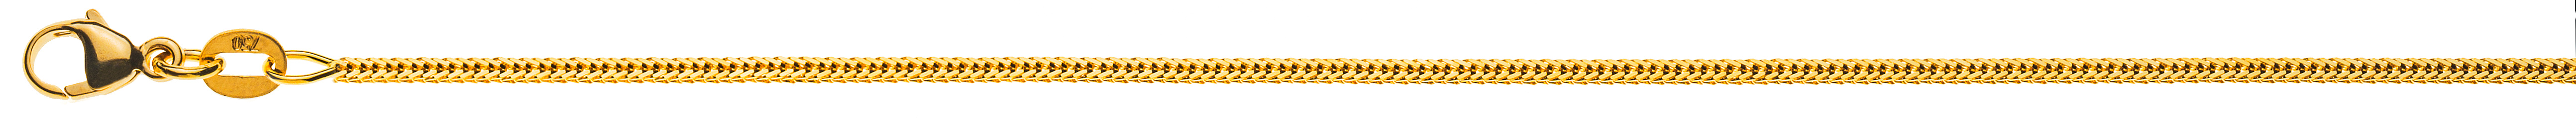 AURONOS Prestige Necklace yellow gold 18K foxtail diamond 38cm 1.2mm